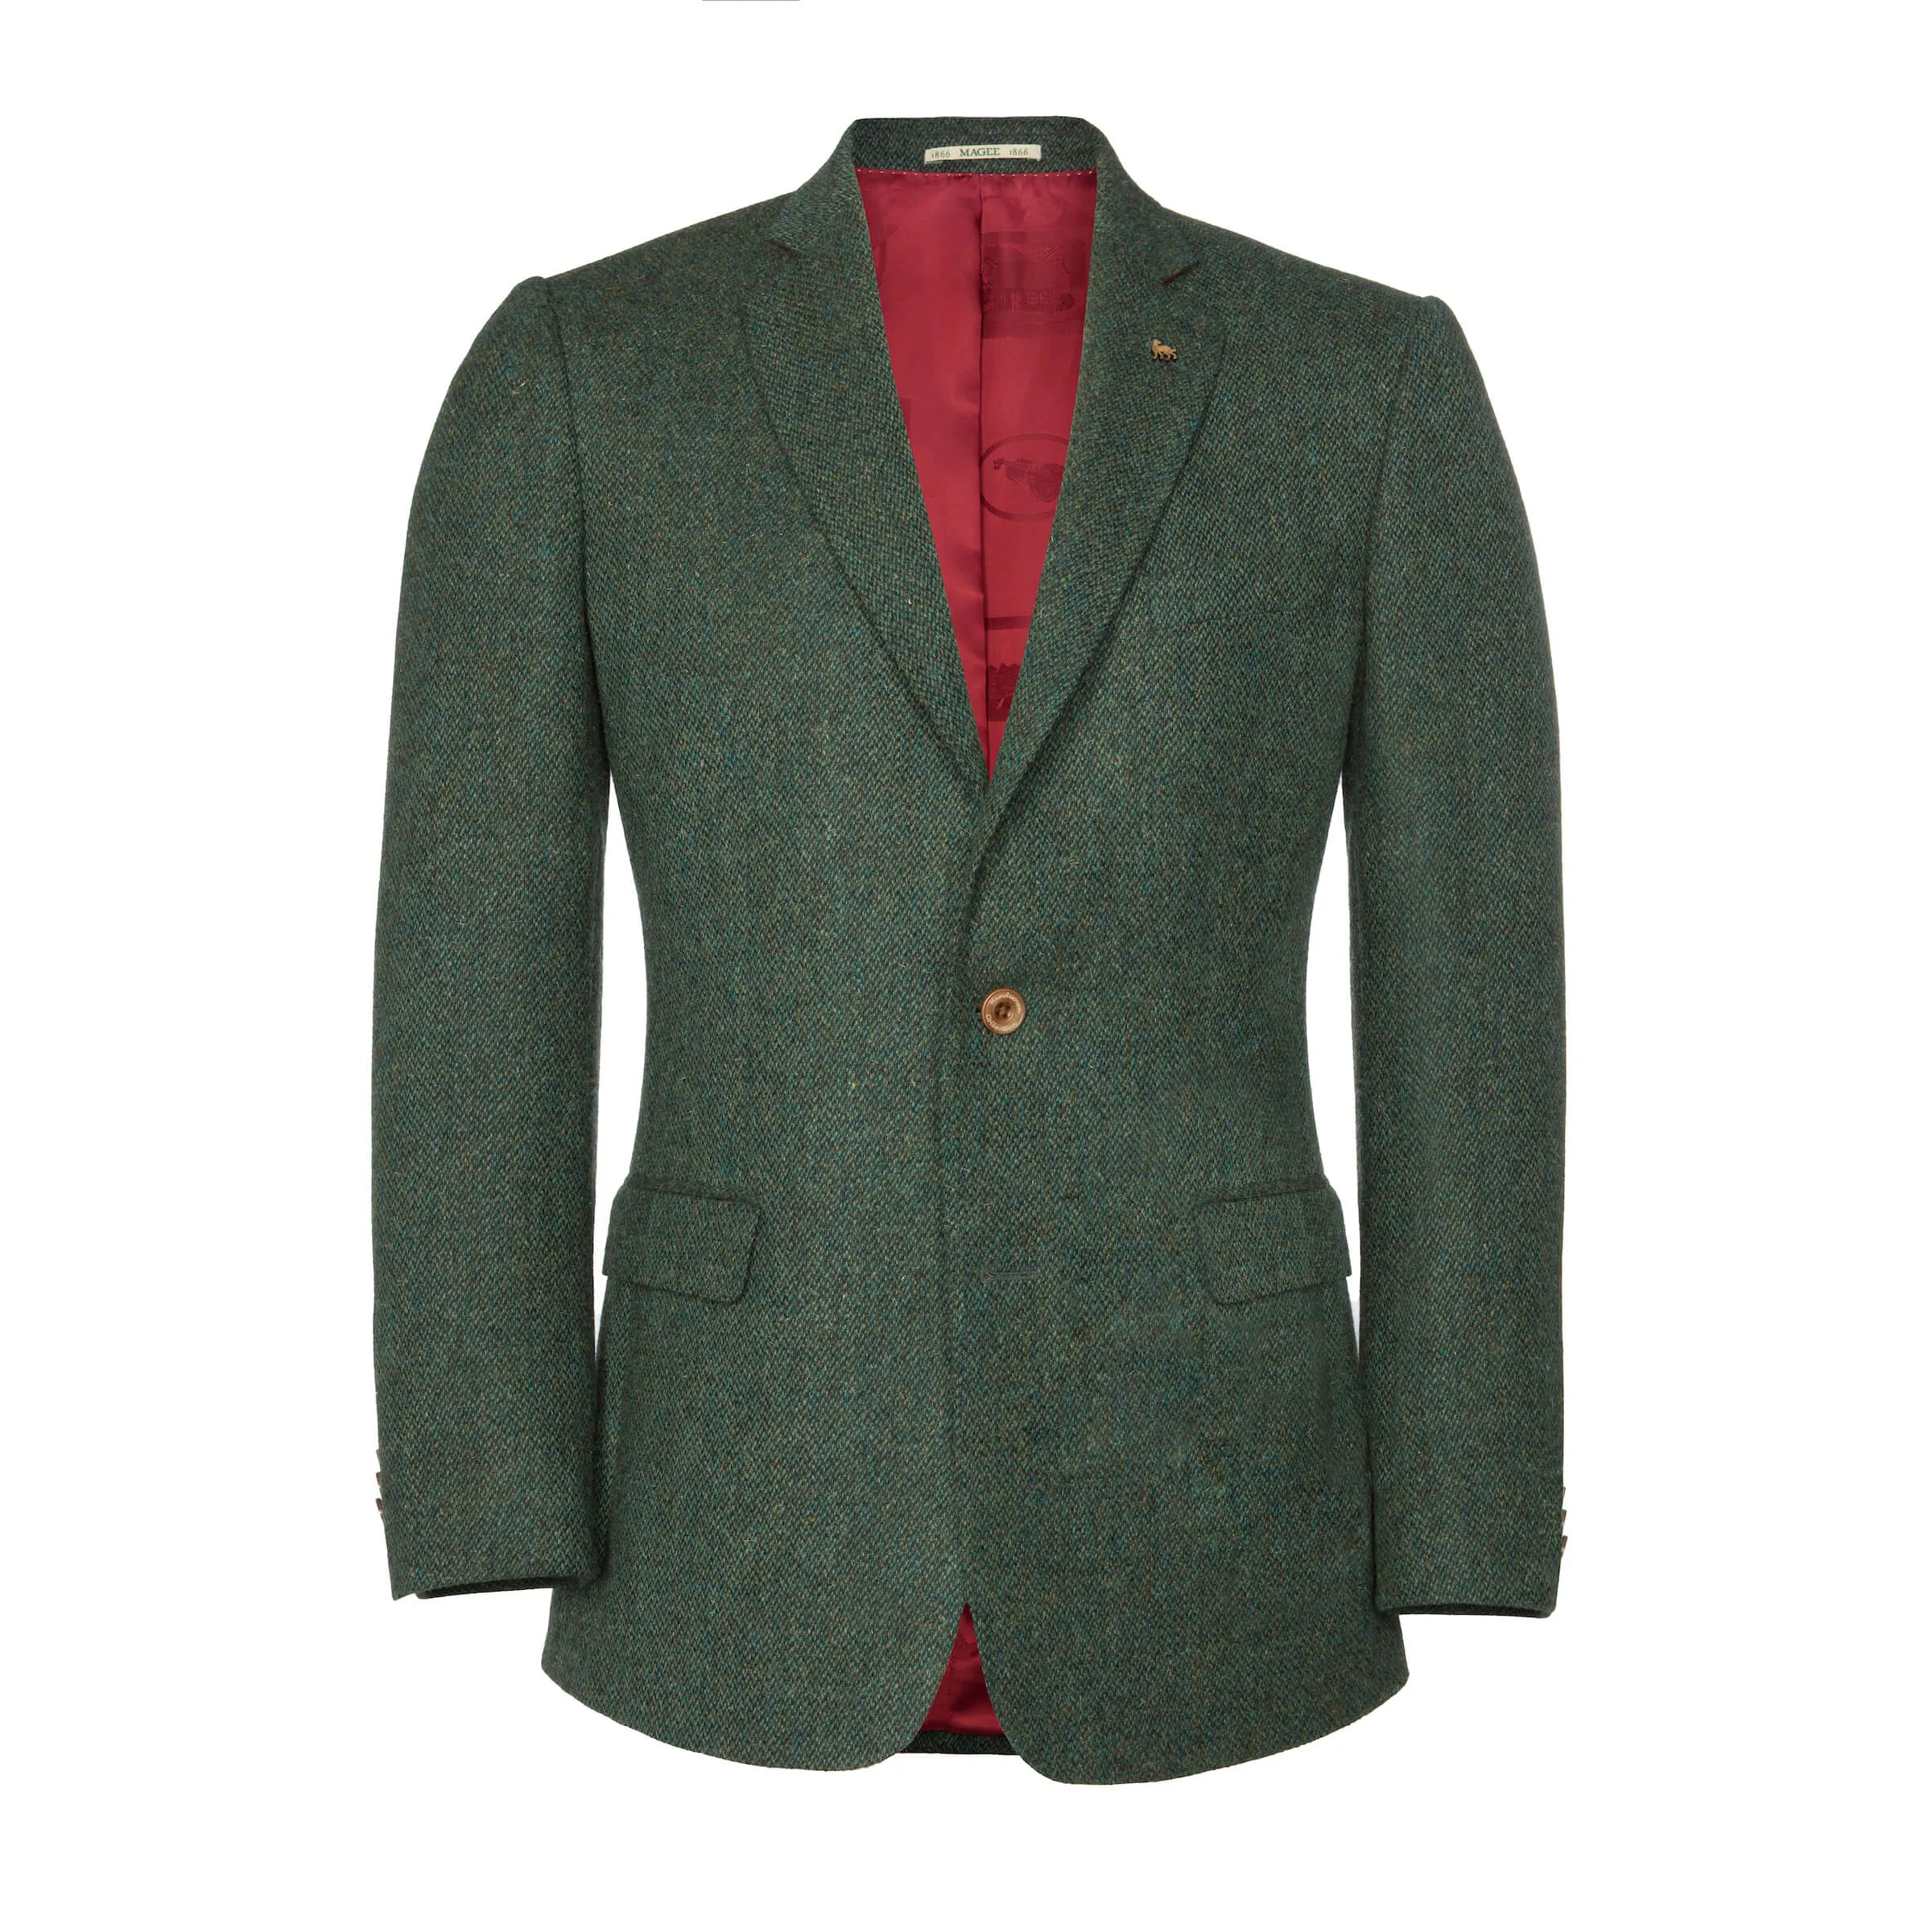  Handwoven Donegal Knocknarea Tweed Jacket